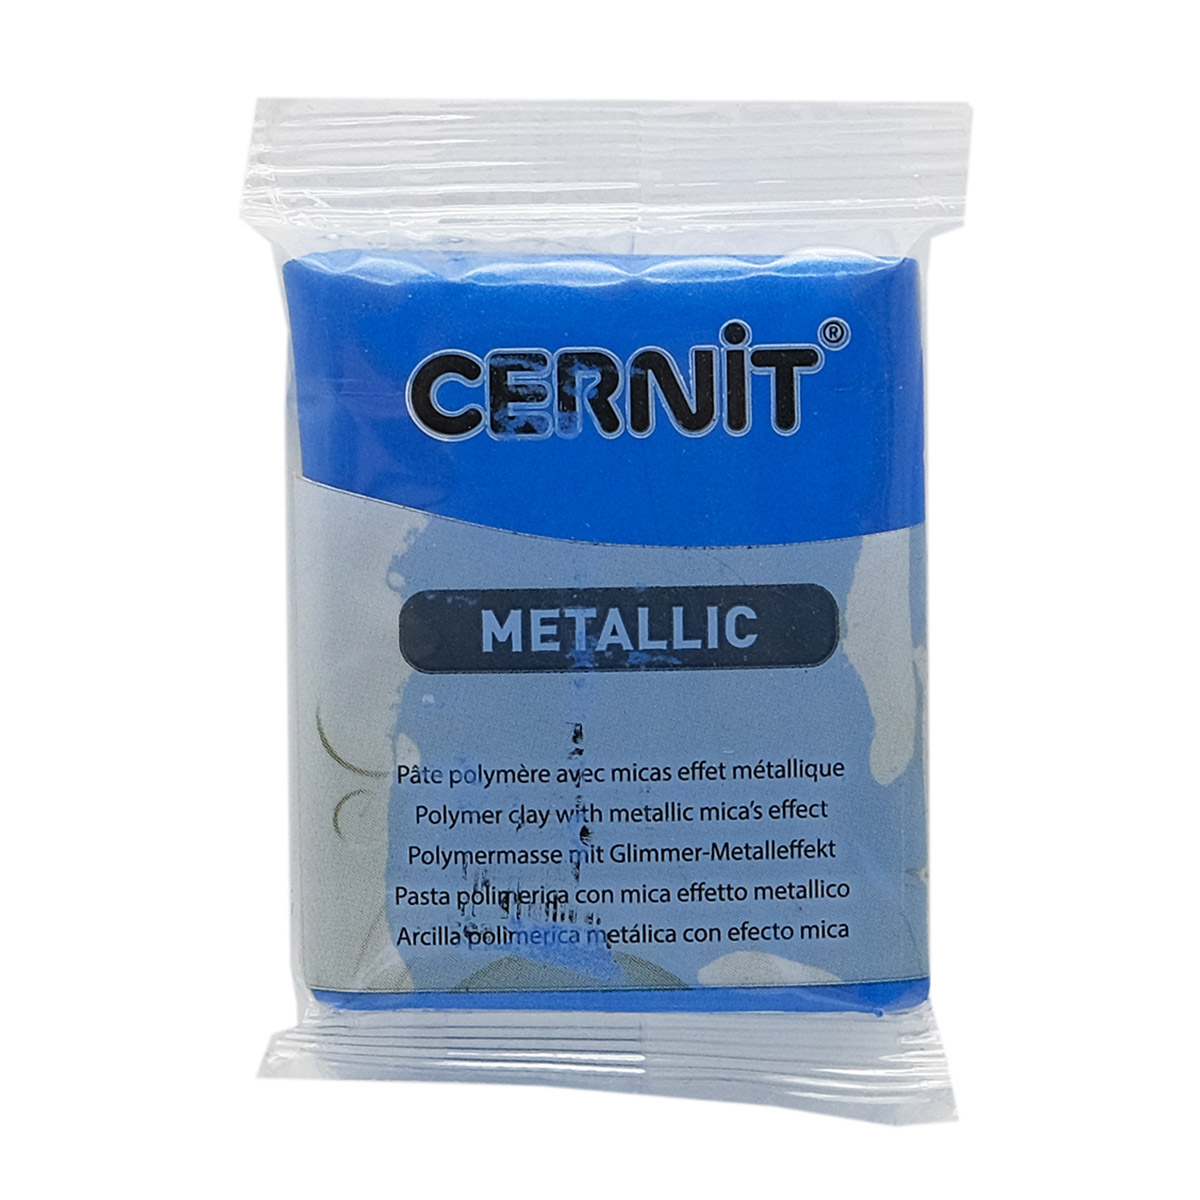 Пластика Cernit Metallic, 56 грамм, цвет 200 синий, арт. CE0870056 ручка подарочная роллер в кожзам футляре корпус синий золото